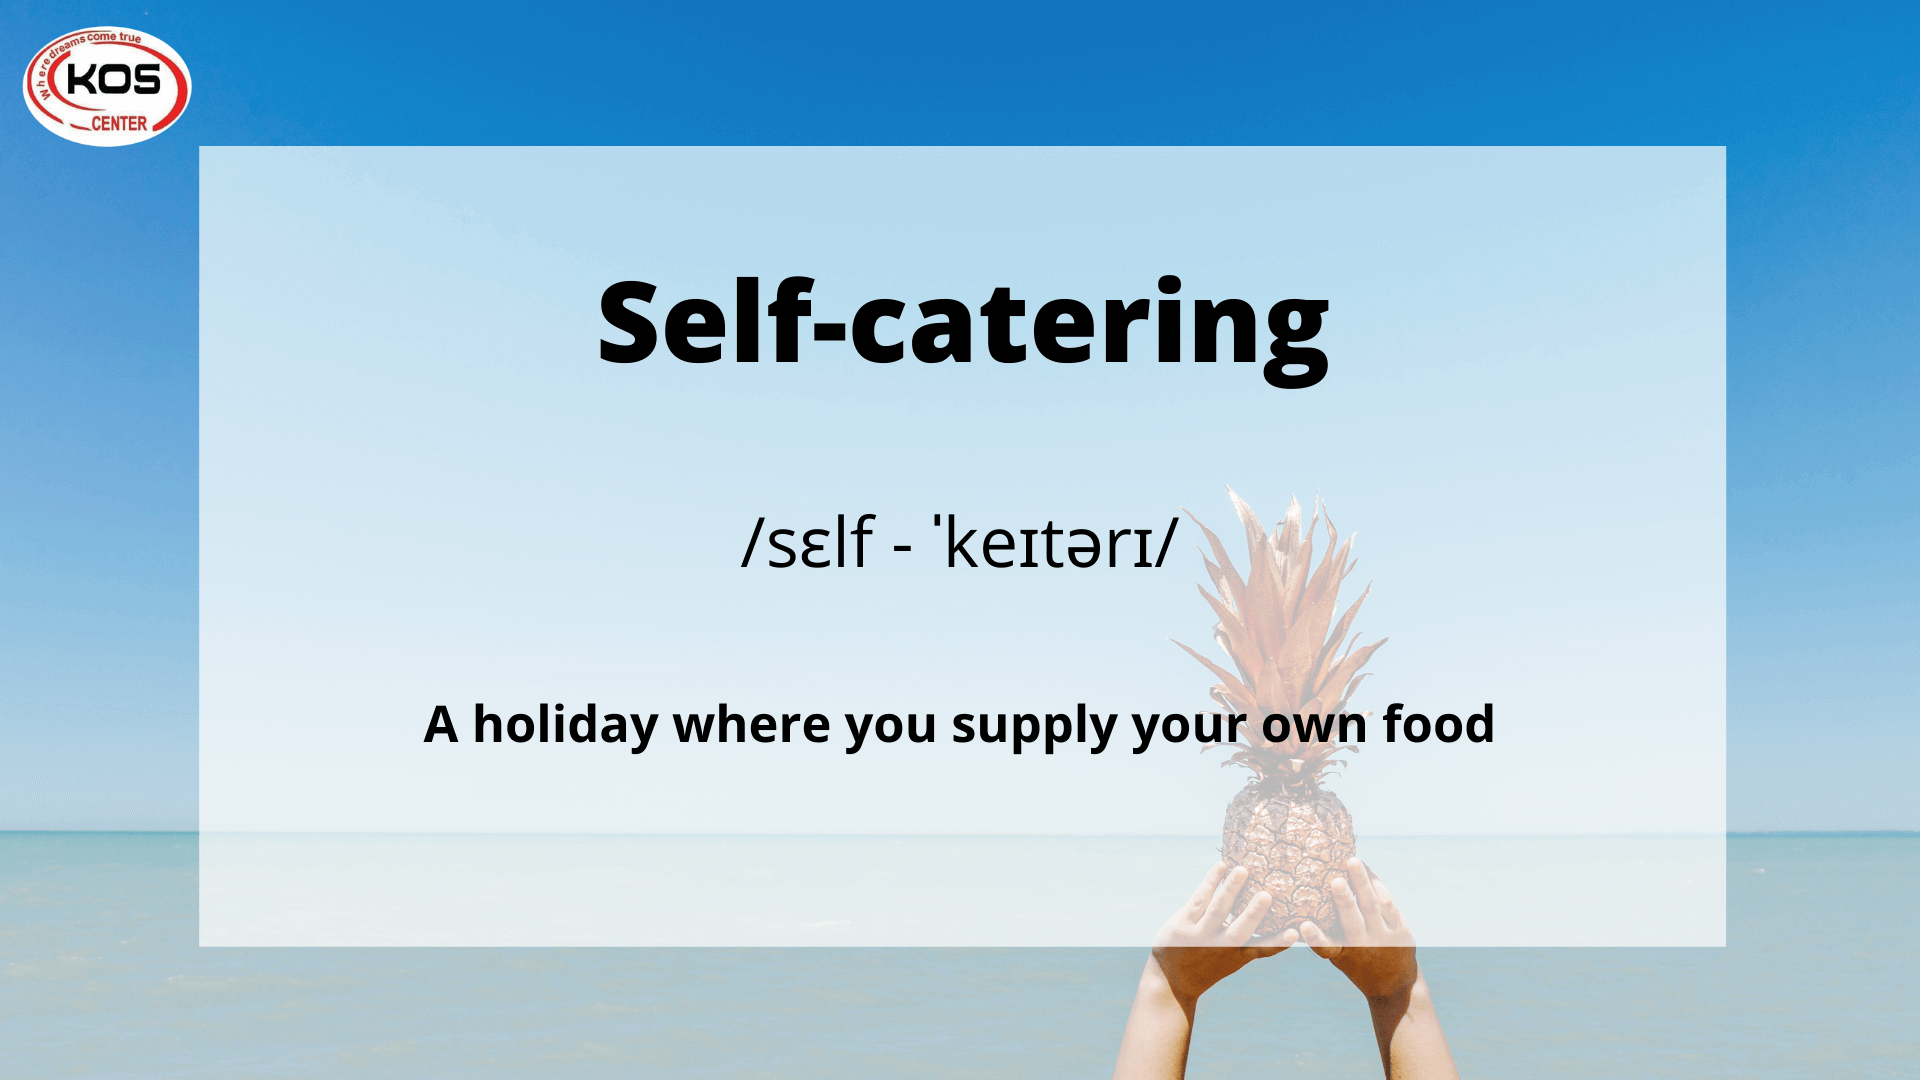 Self-catering